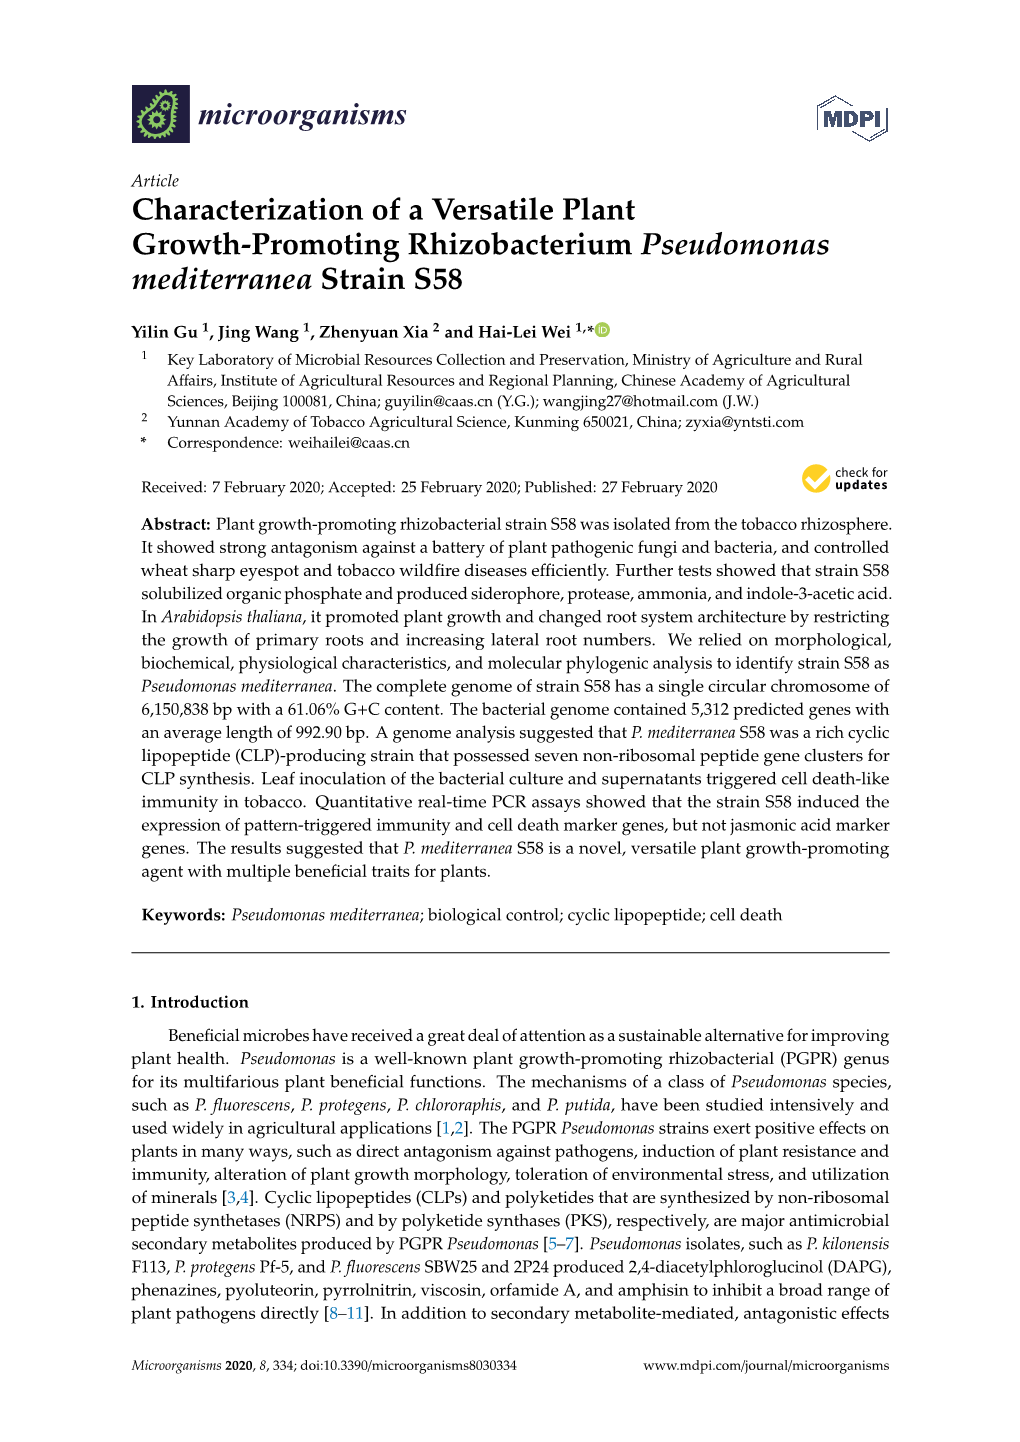 Characterization of a Versatile Plant Growth-Promoting Rhizobacterium Pseudomonas Mediterranea Strain S58